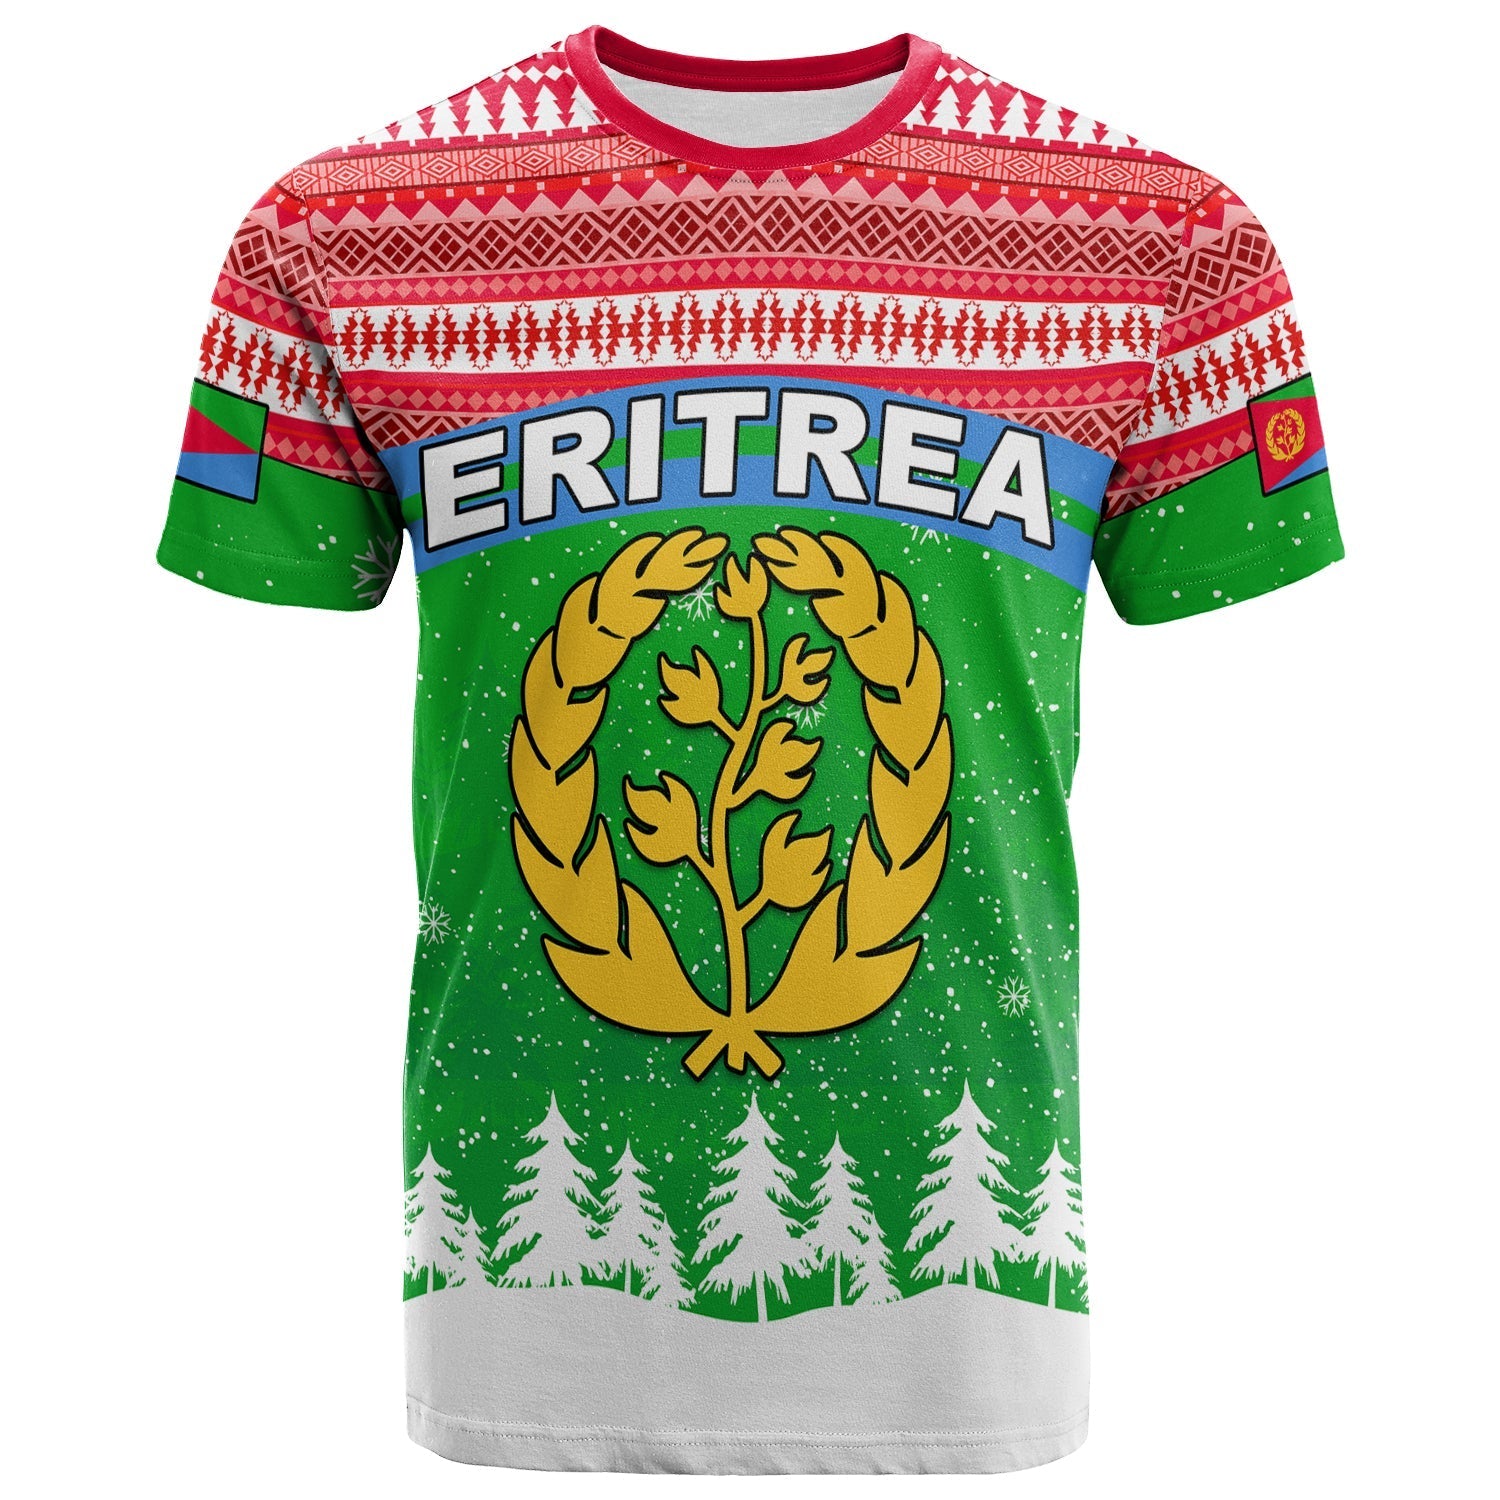 eritrea-t-shirt-merry-christmas-mix-african-pattern